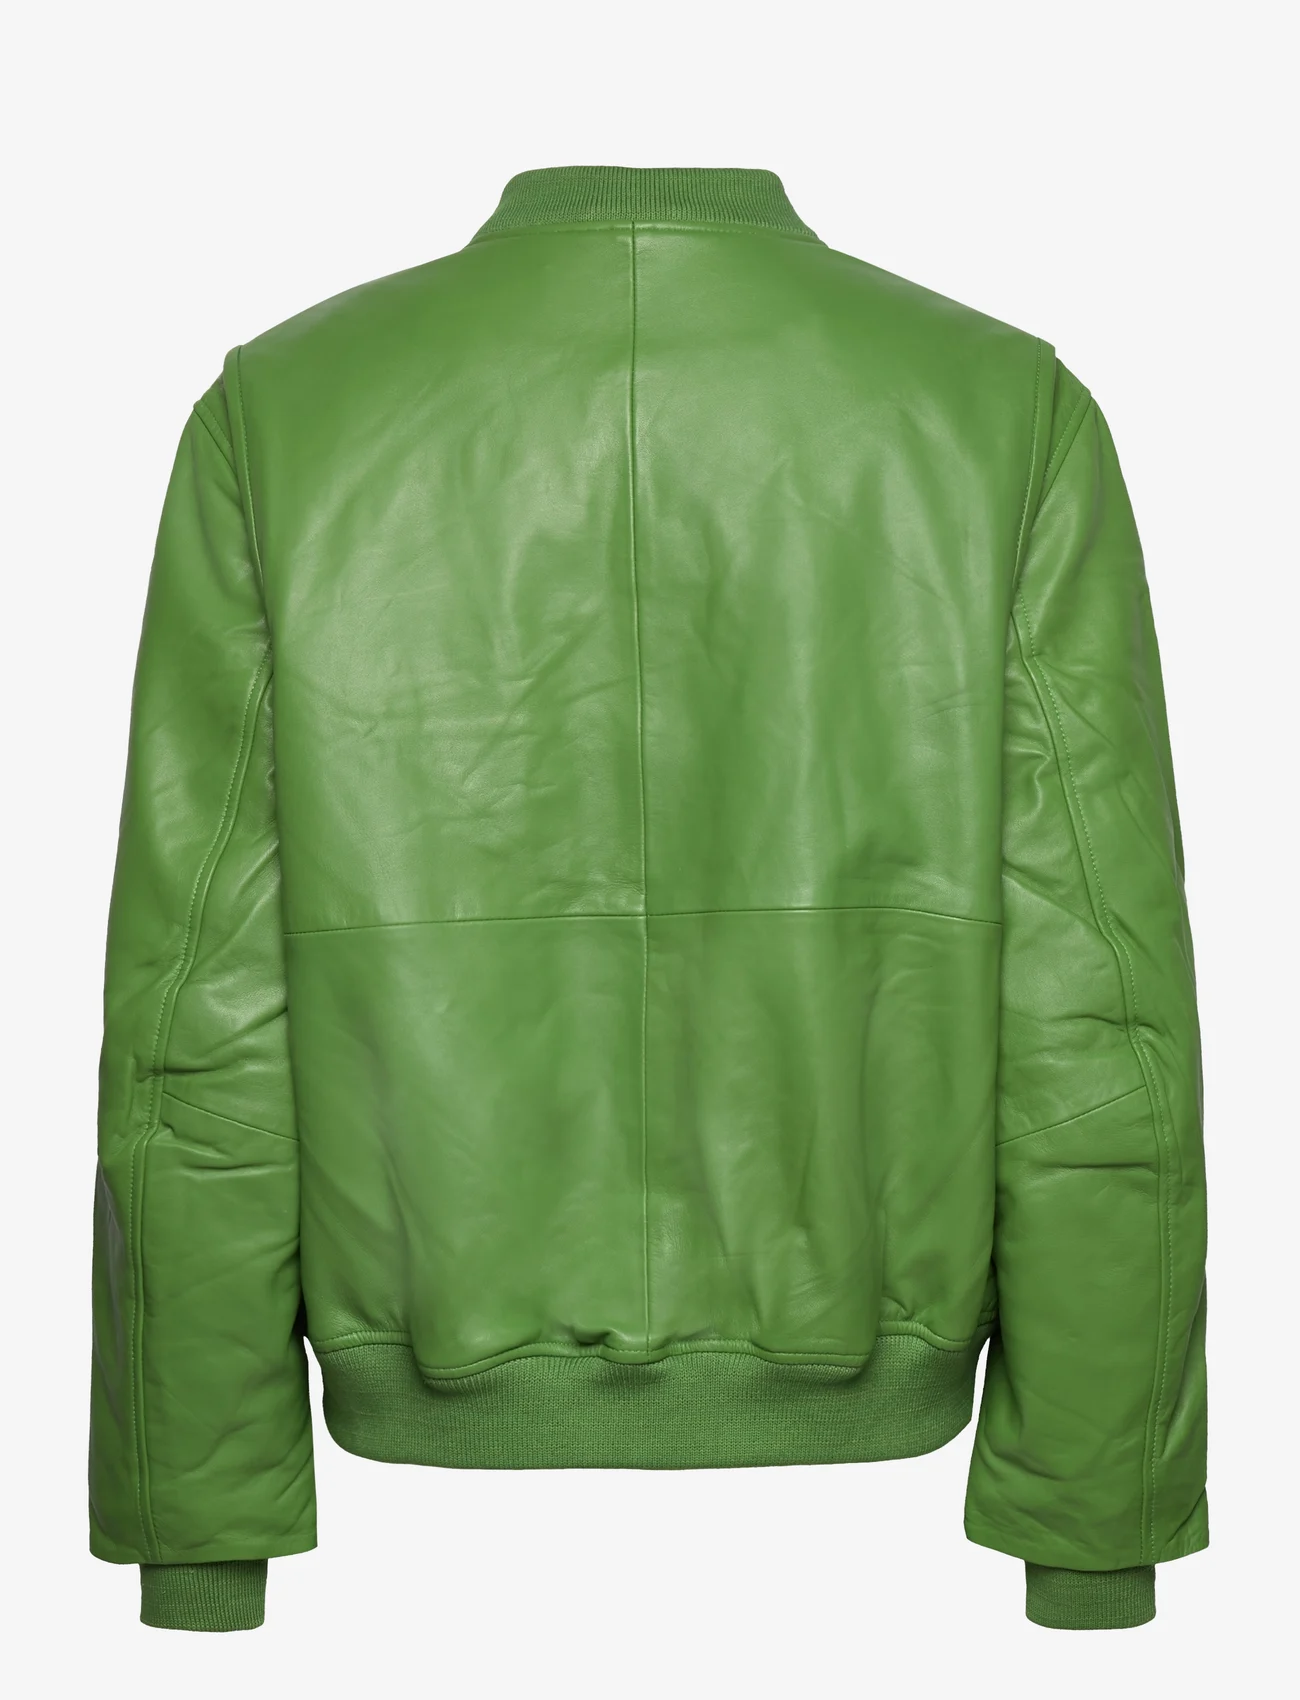 REMAIN Birger Christensen - Leather Bomber Jacket - kevättakit - forest green - 1